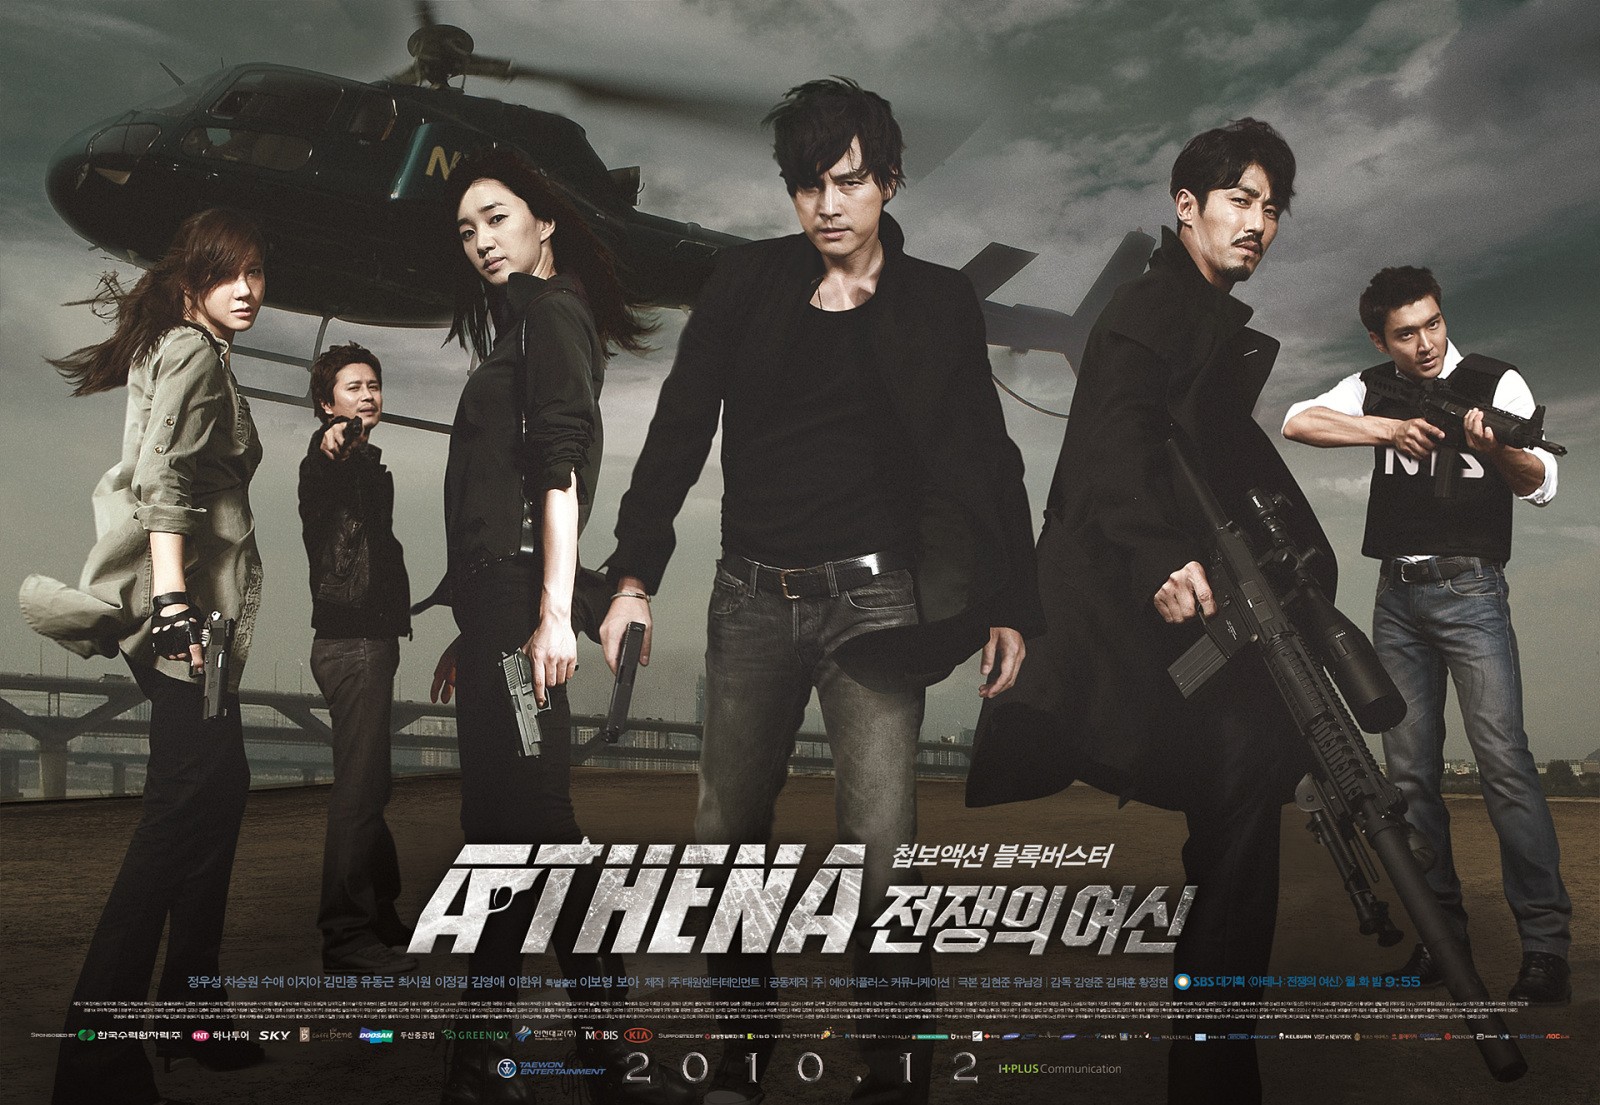 http://www.randomdetox.com/wp-content/uploads/2010/12/athena-korean-drama.jpg